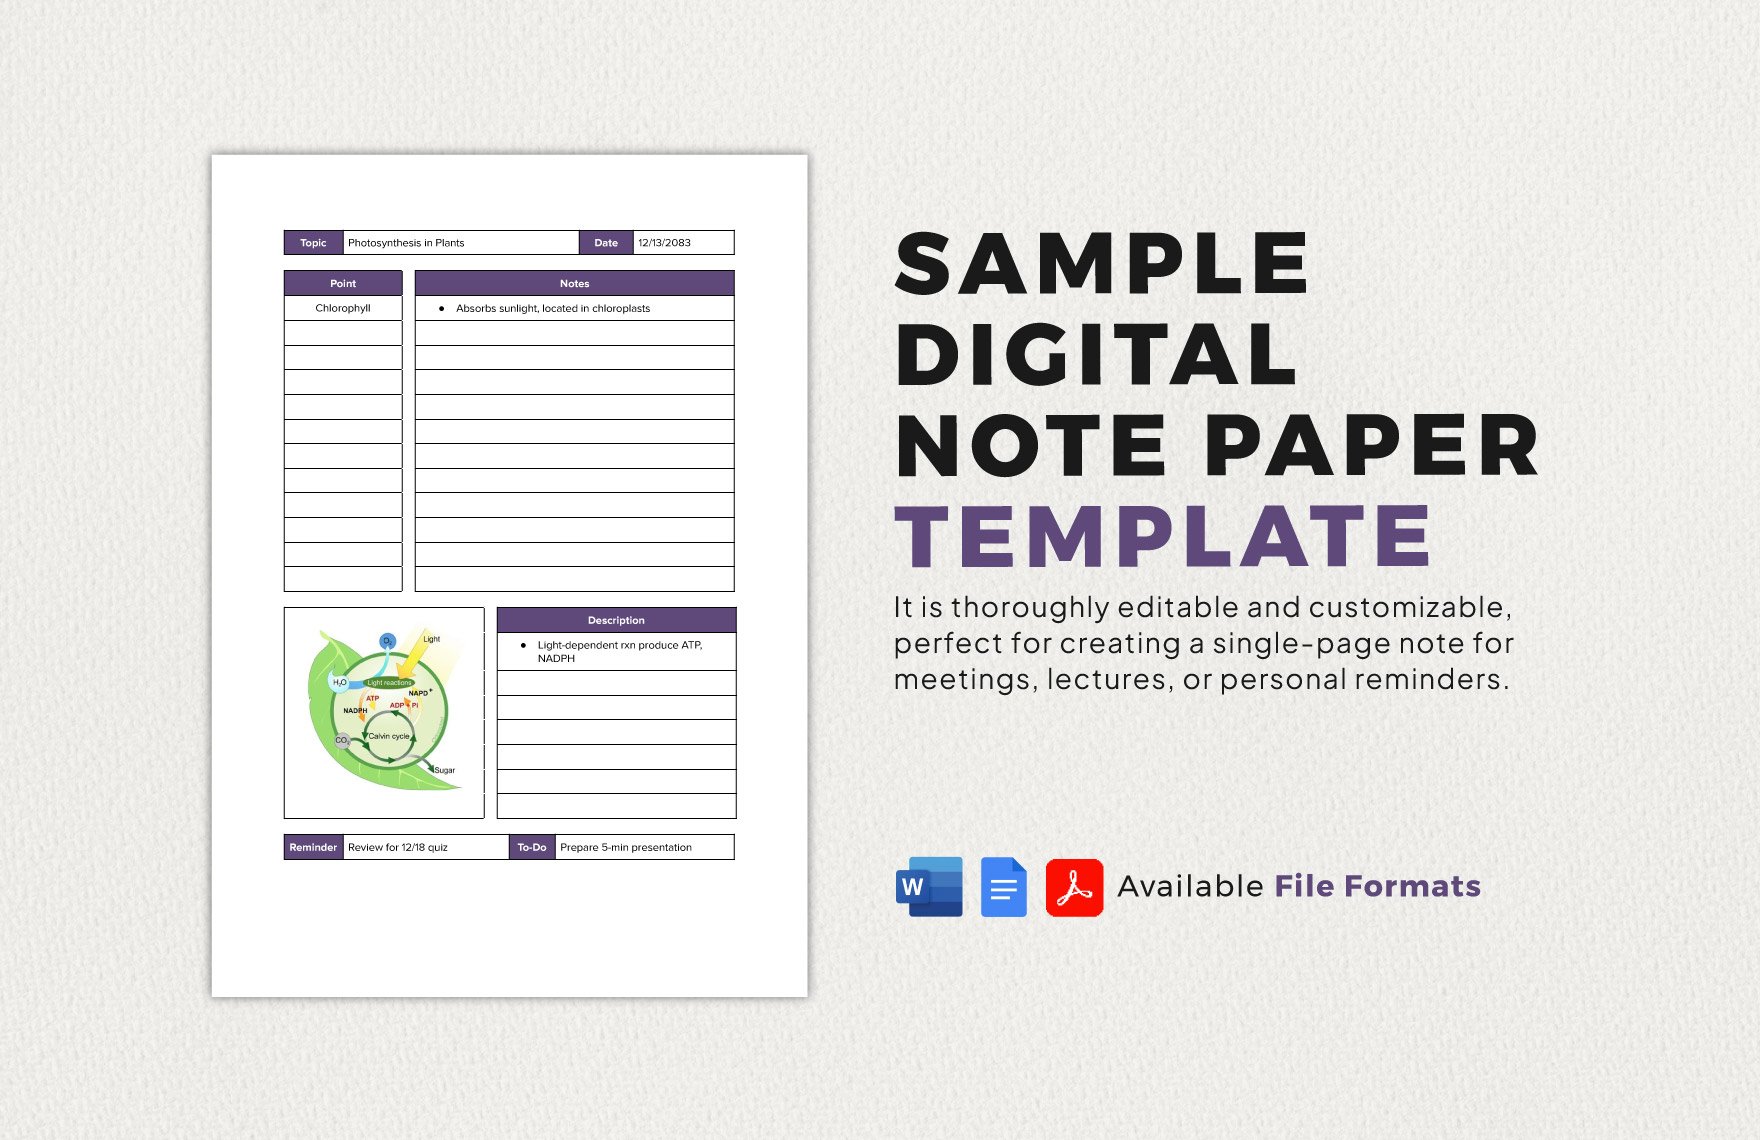 Sample Digital Note Paper Template